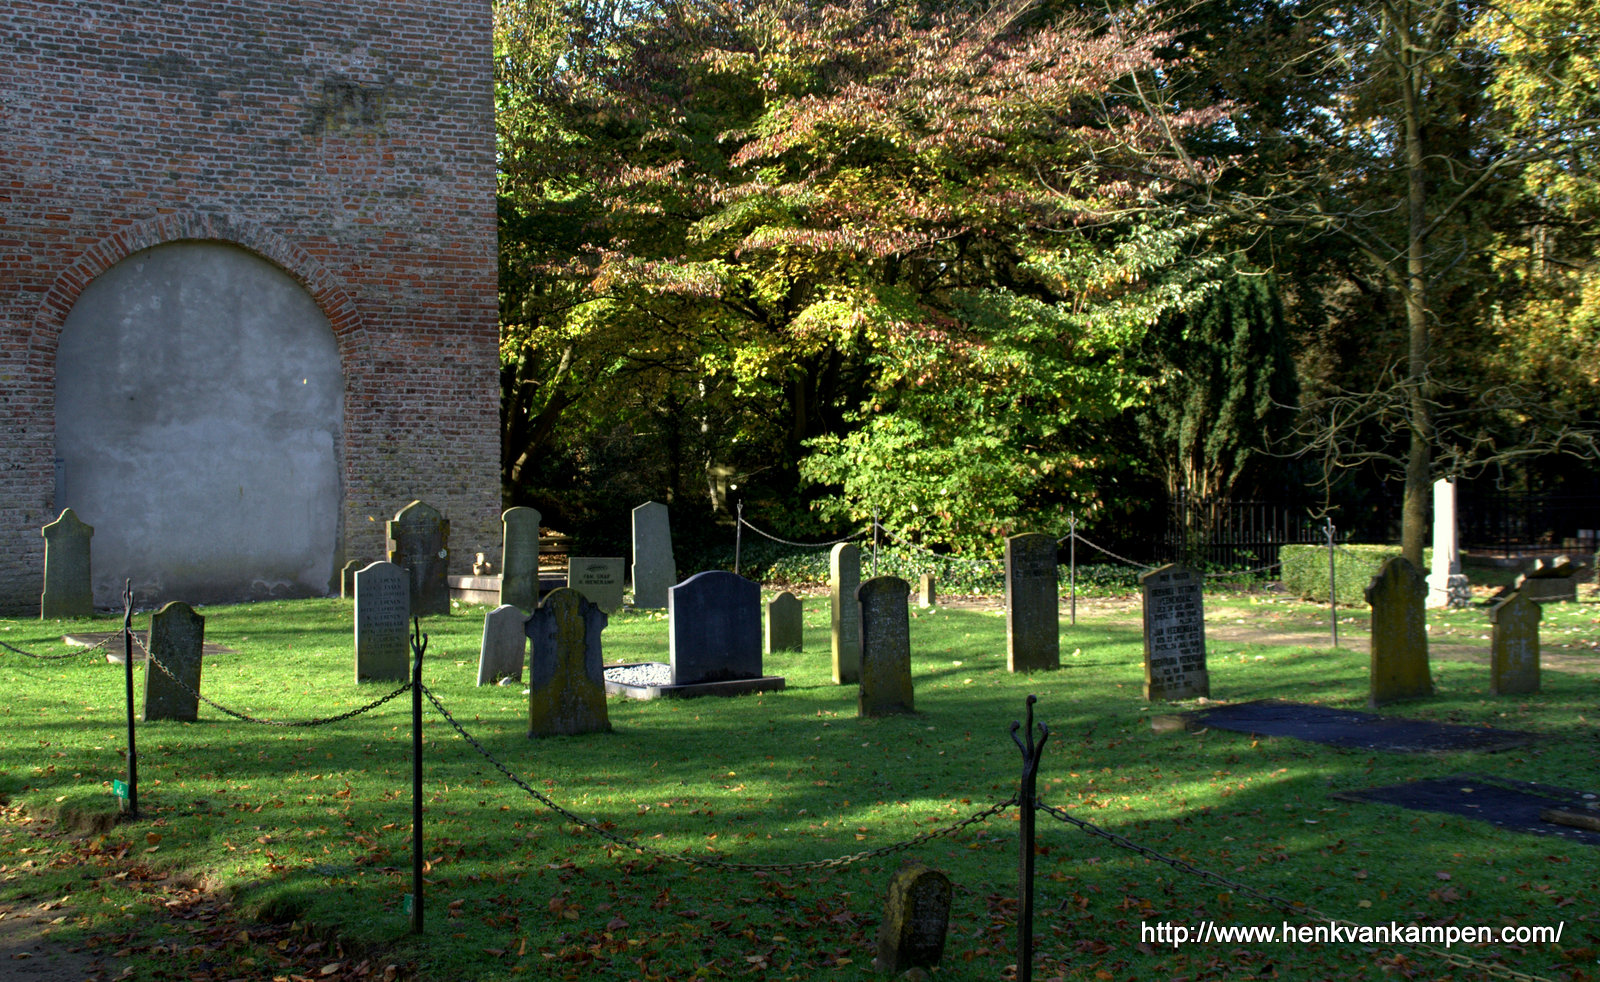 Former church tower and old graveyard of Oud Leusden